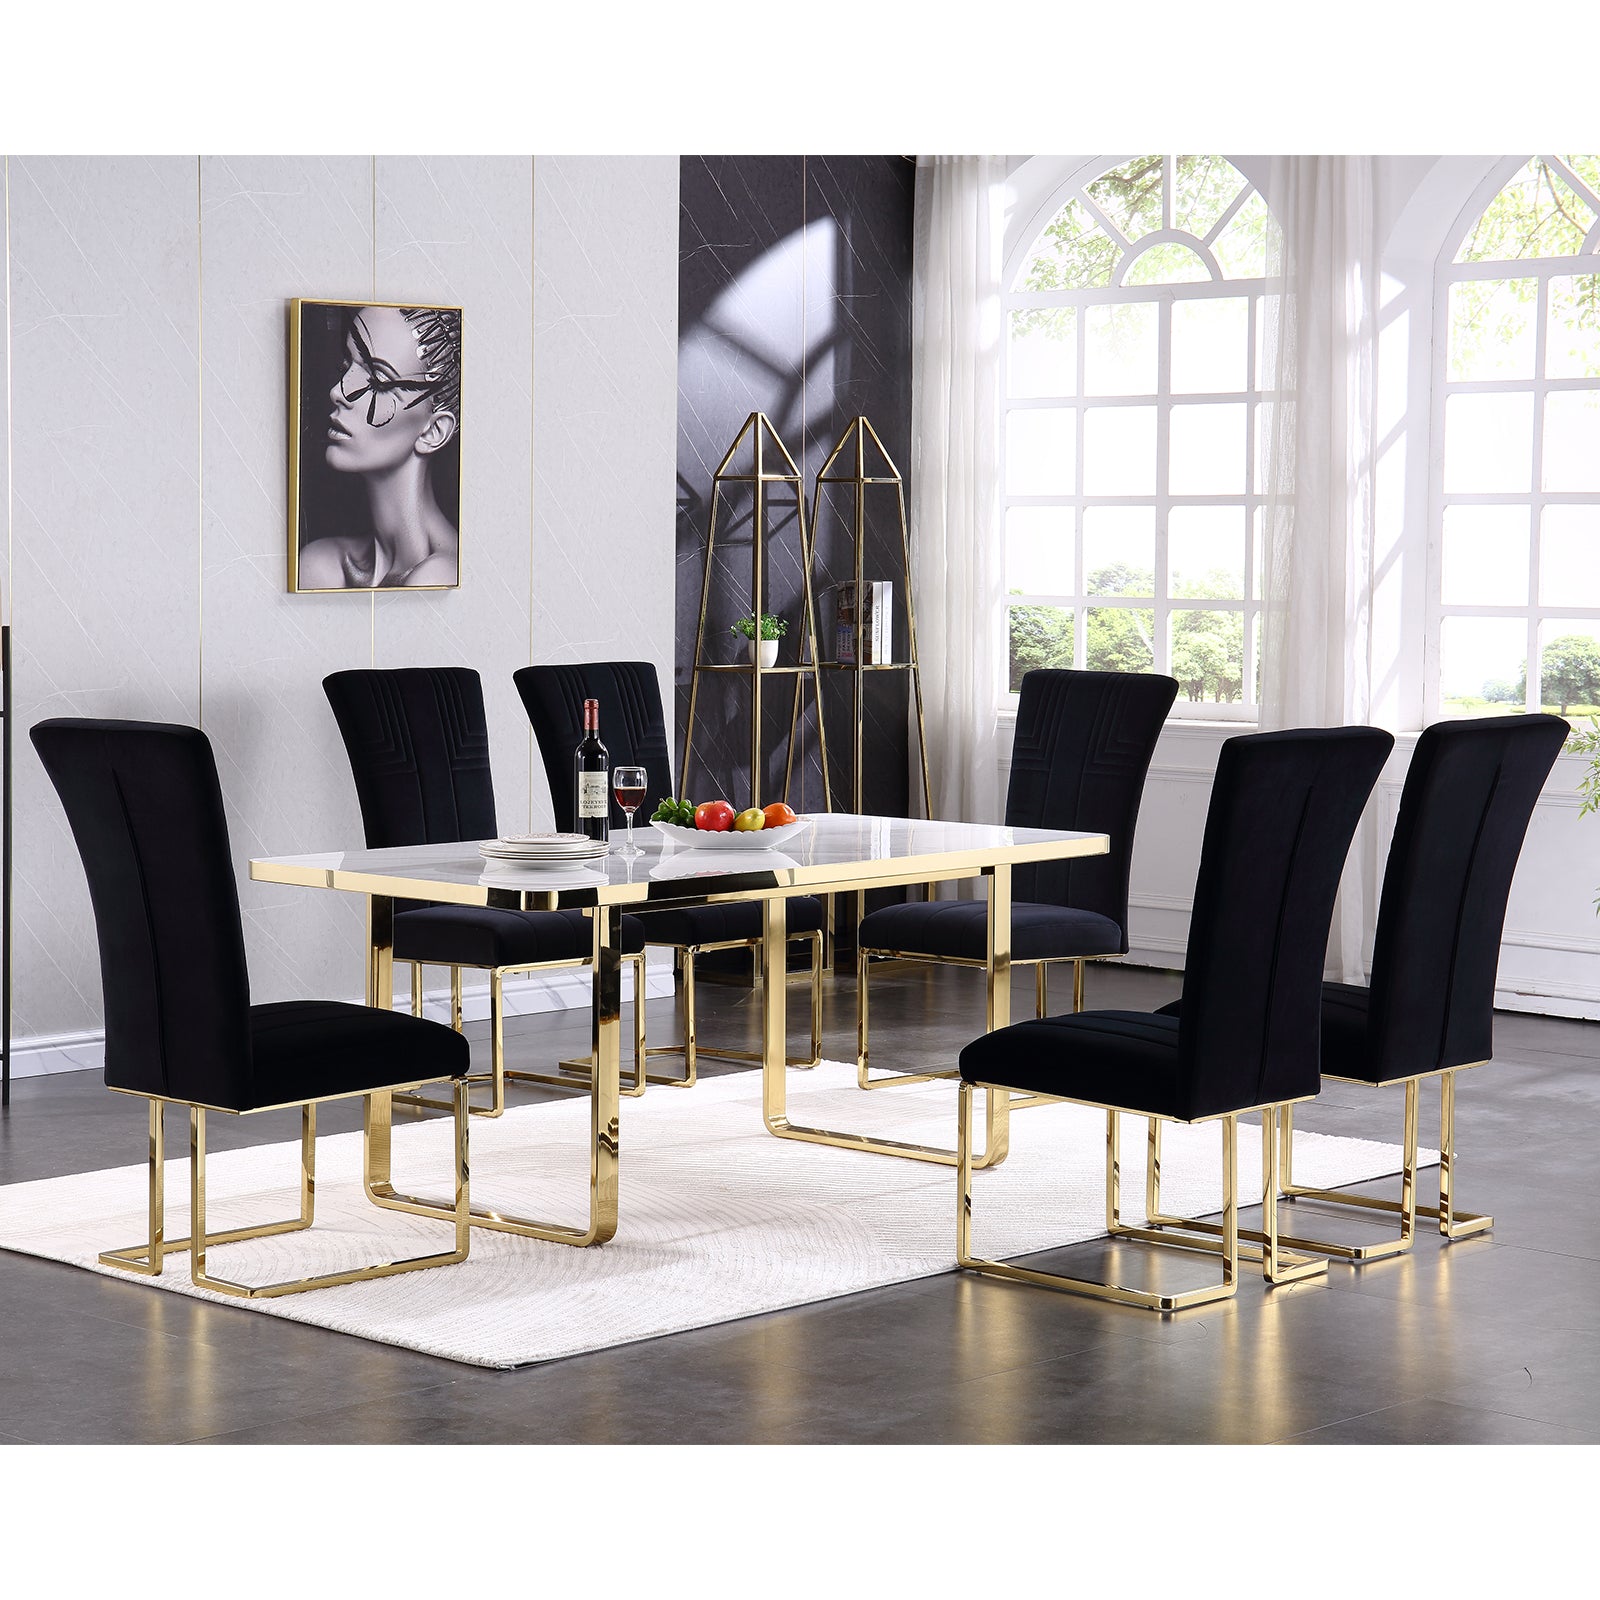 710 Set | AUZ Black and Gold Dining room Sets for 6